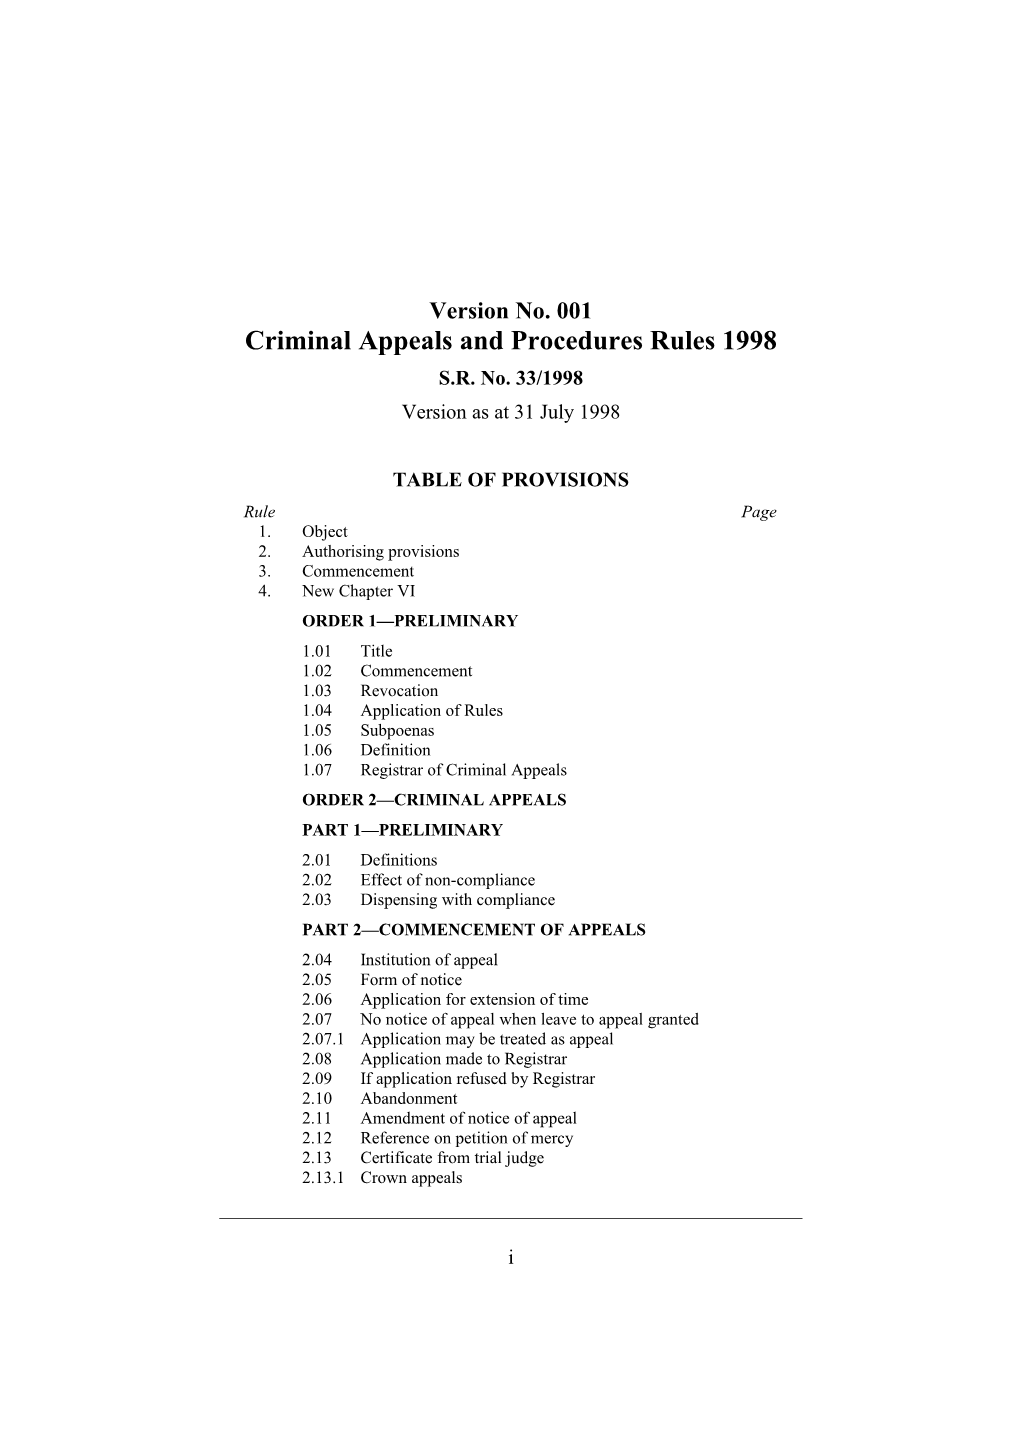 Criminal Appeals and Procedures Rules 1998